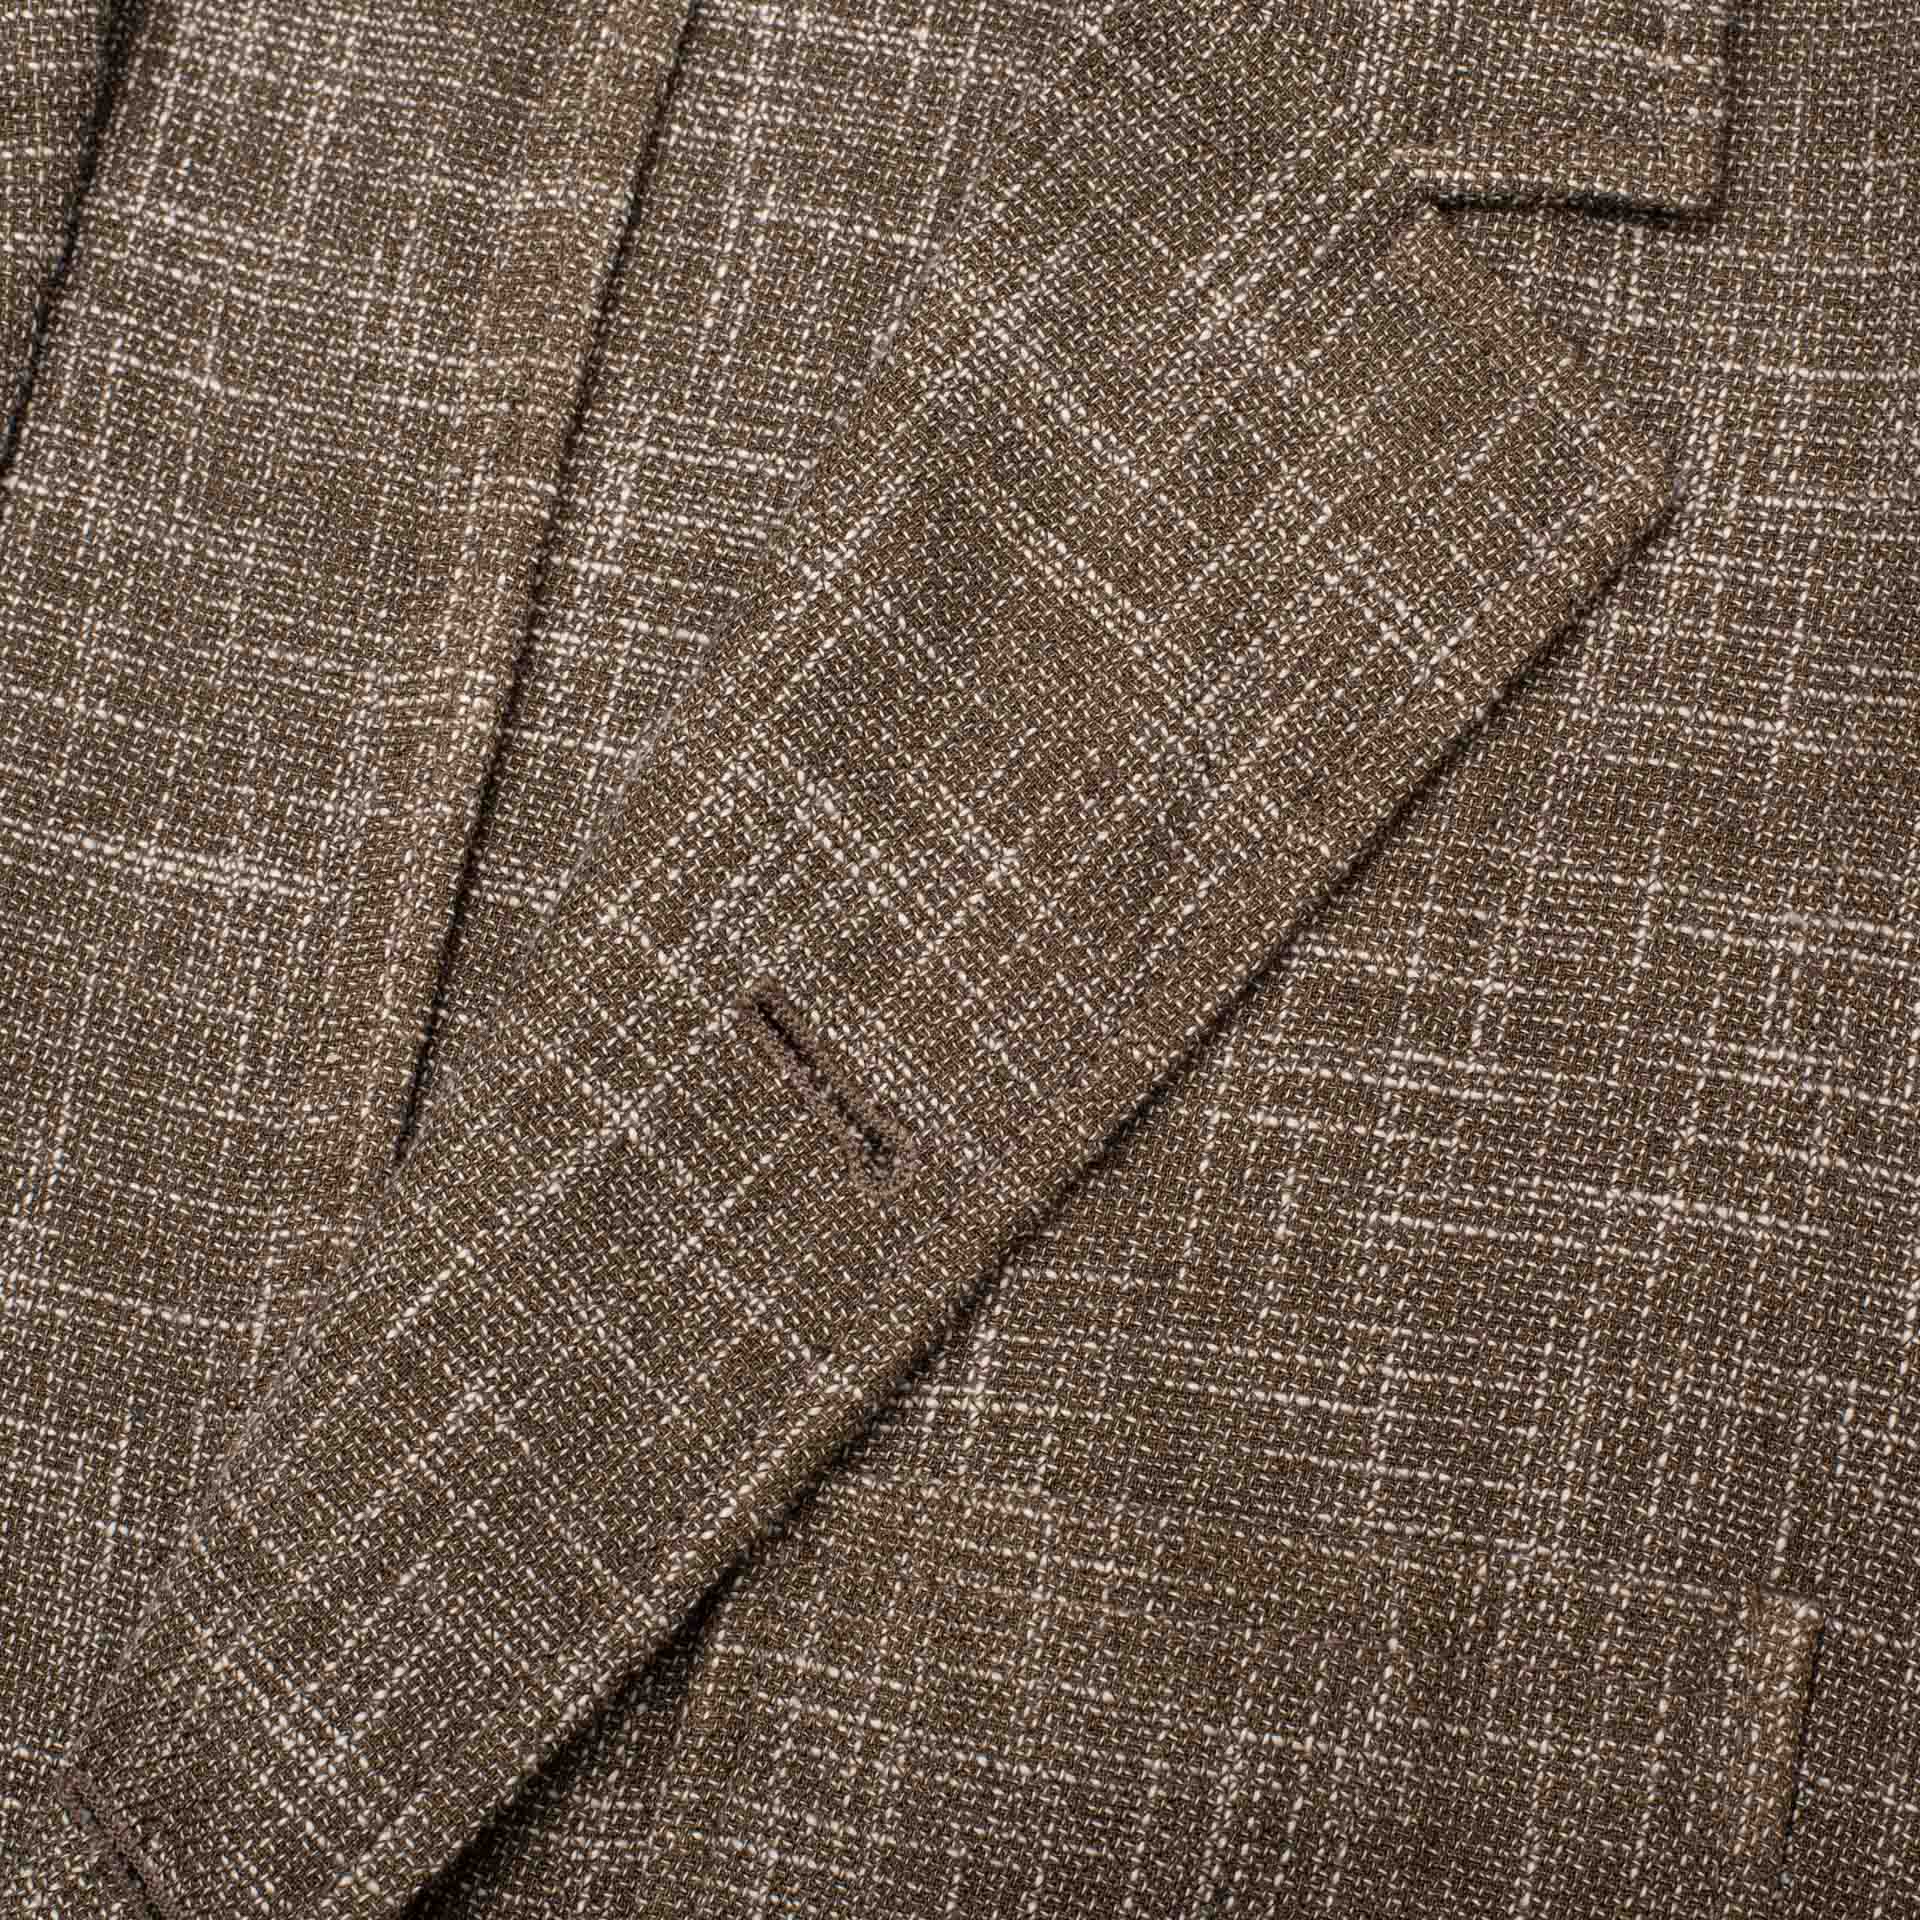 BOGLIOLI Milano "67" Khaki Wool-Cotton 4 Button Unlined Jacket EU M NEW US 40 BOGLIOLI